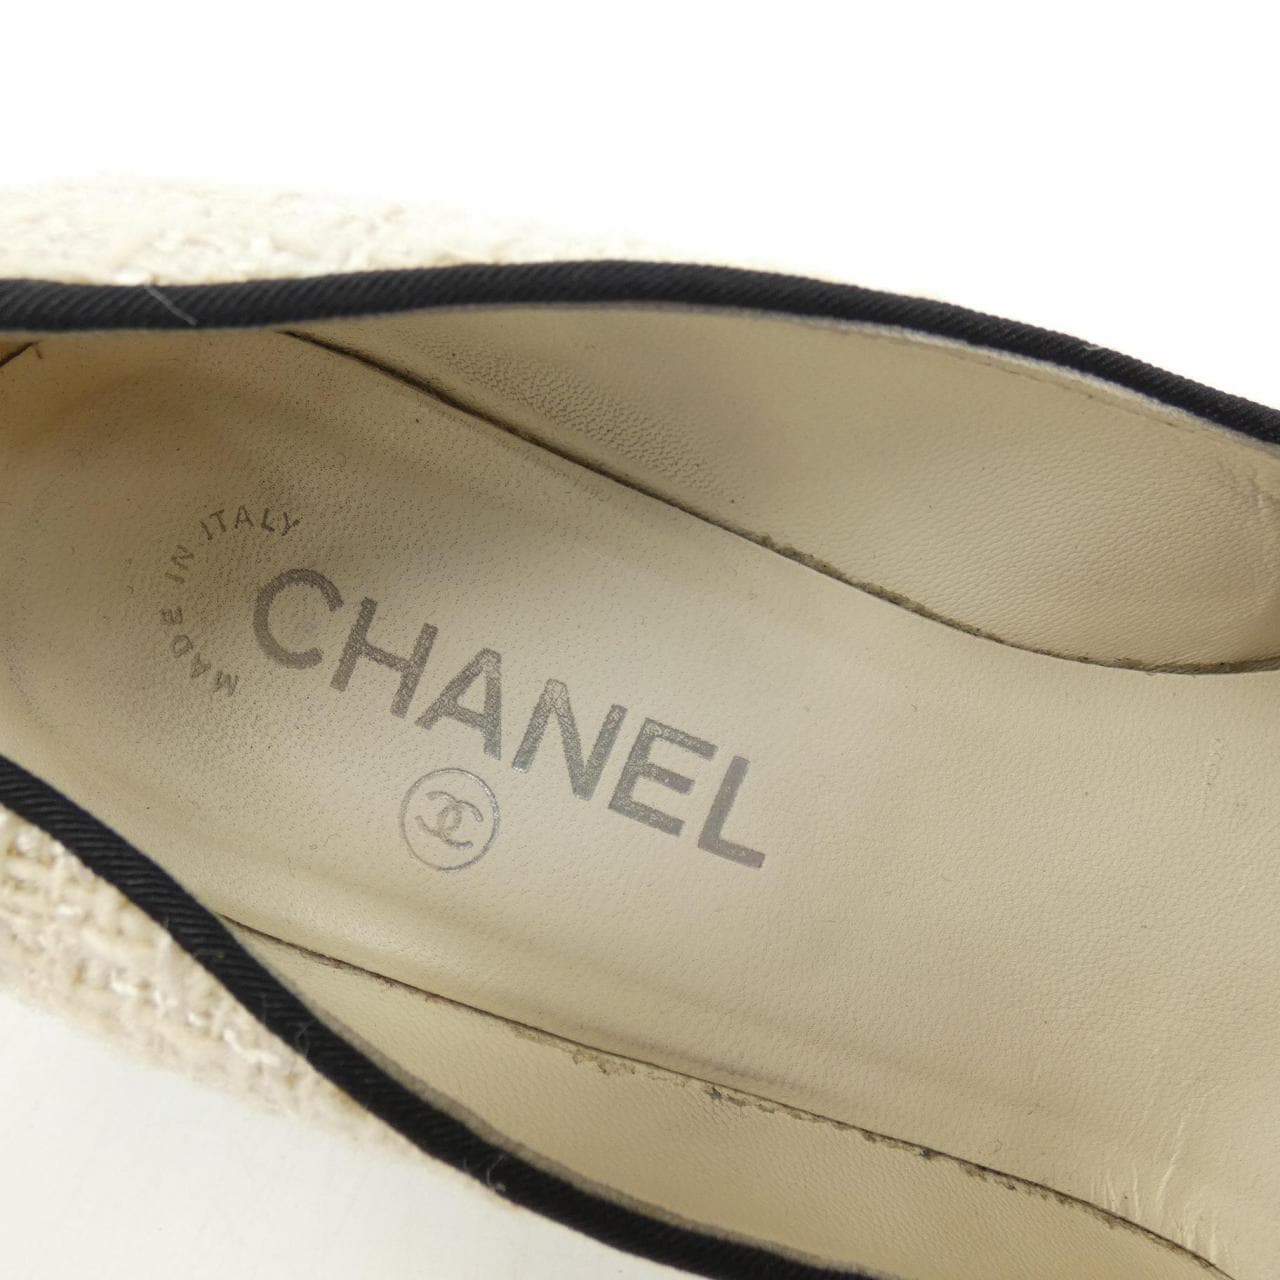 CHANEL香奈儿高跟鞋。